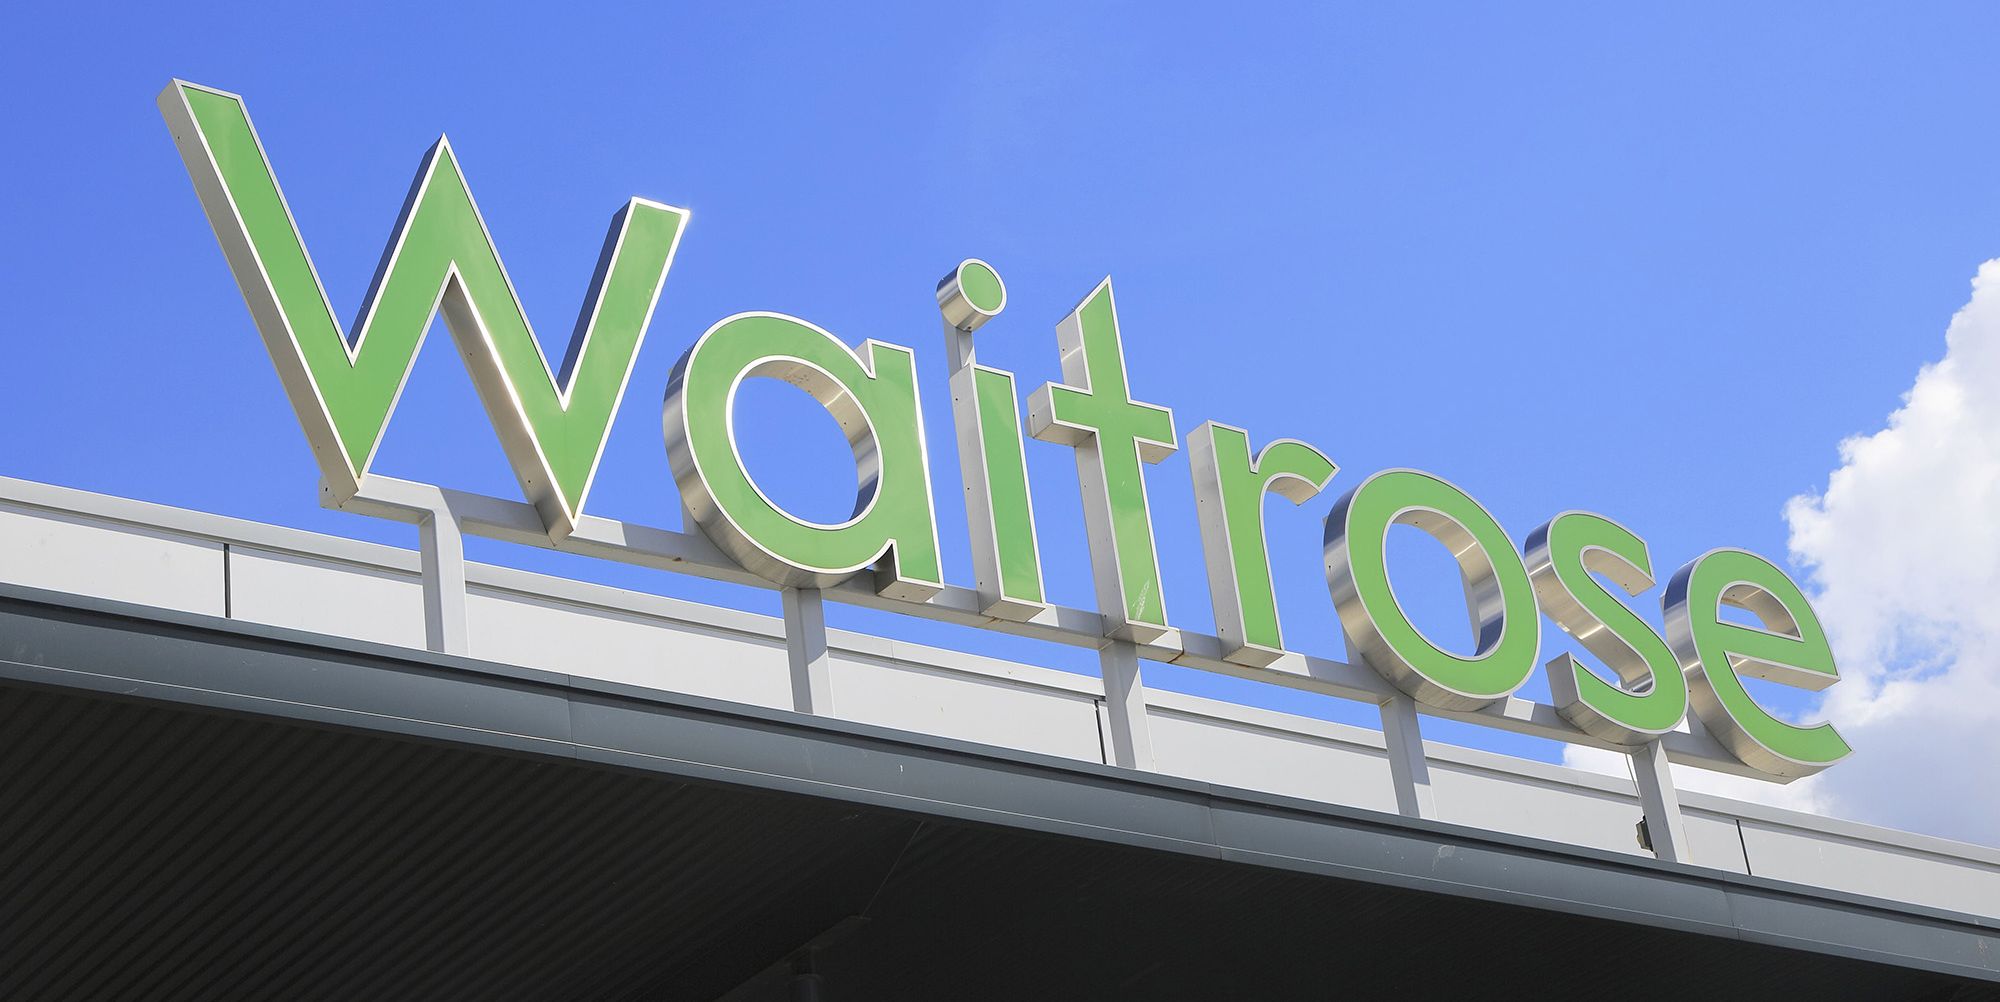 green waitrose supermarket shop sign against blue sky, ipswich, suffolk, england